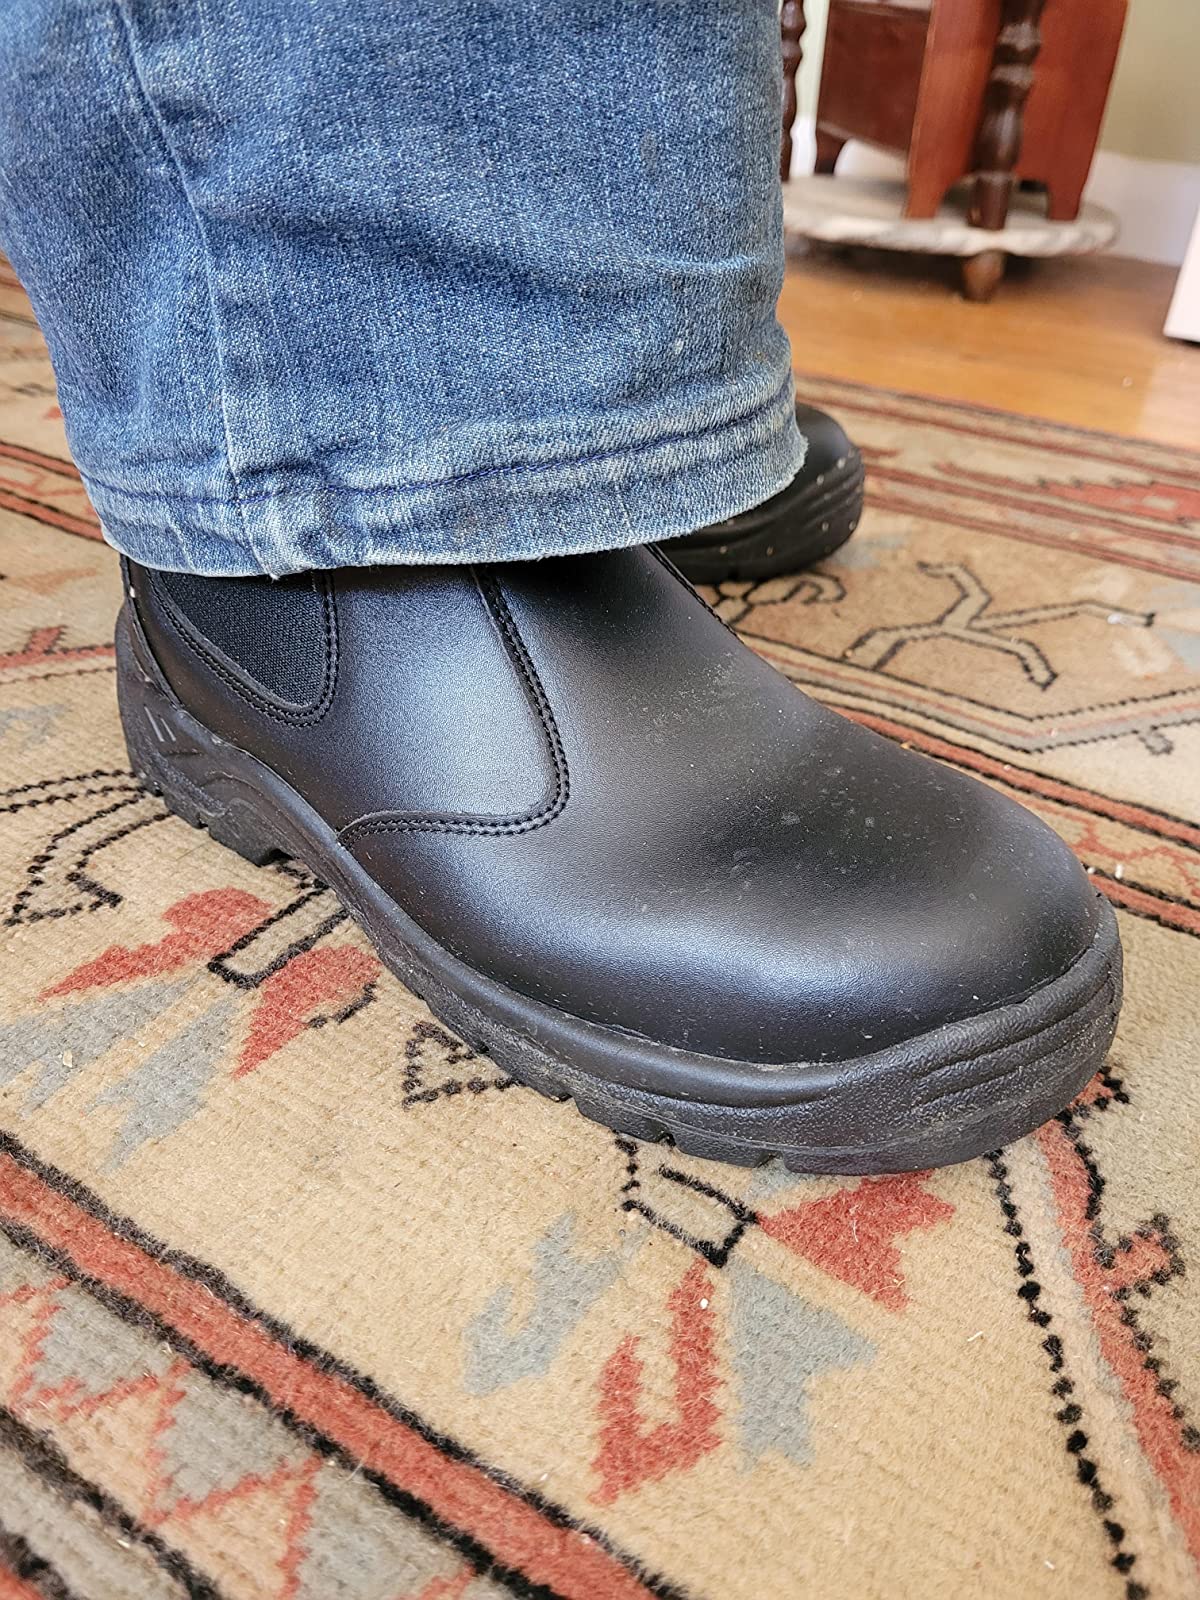 Antler BK Waterproof Steel Toe Work Boots | Safetoe Official Shop